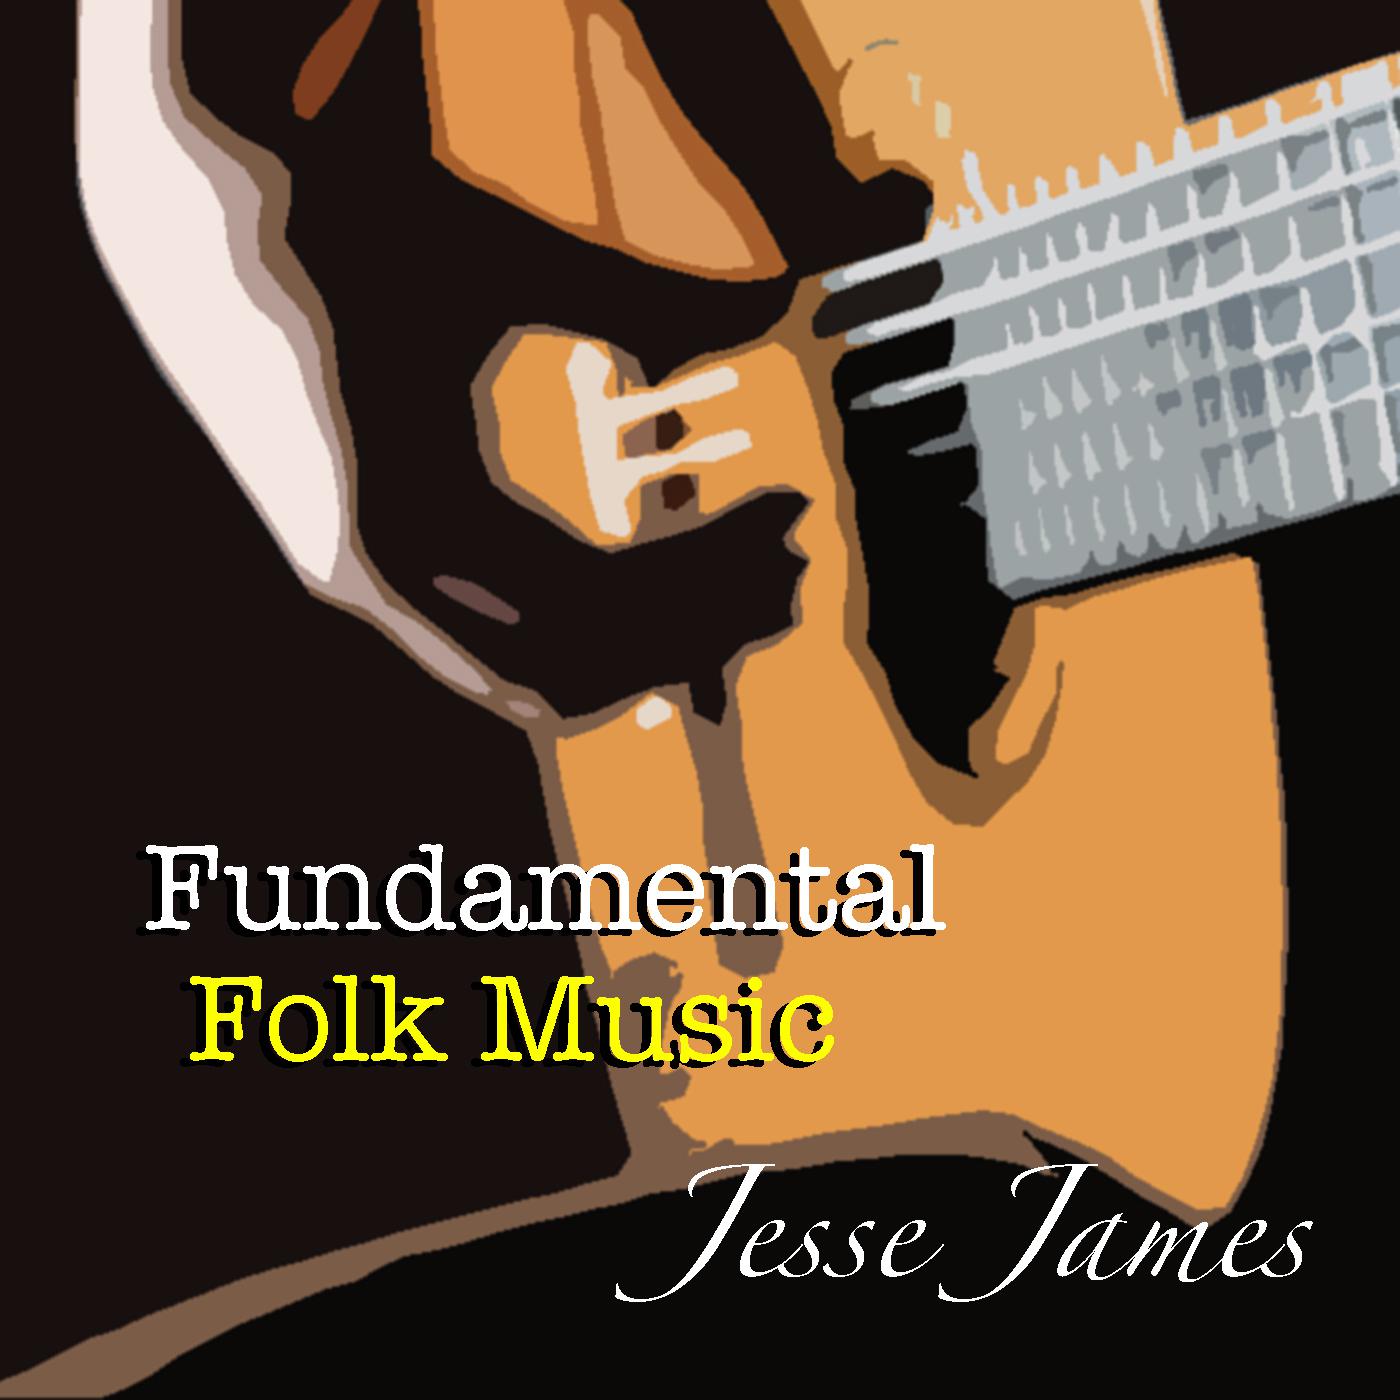 Jesse James Fundamental Folk Music